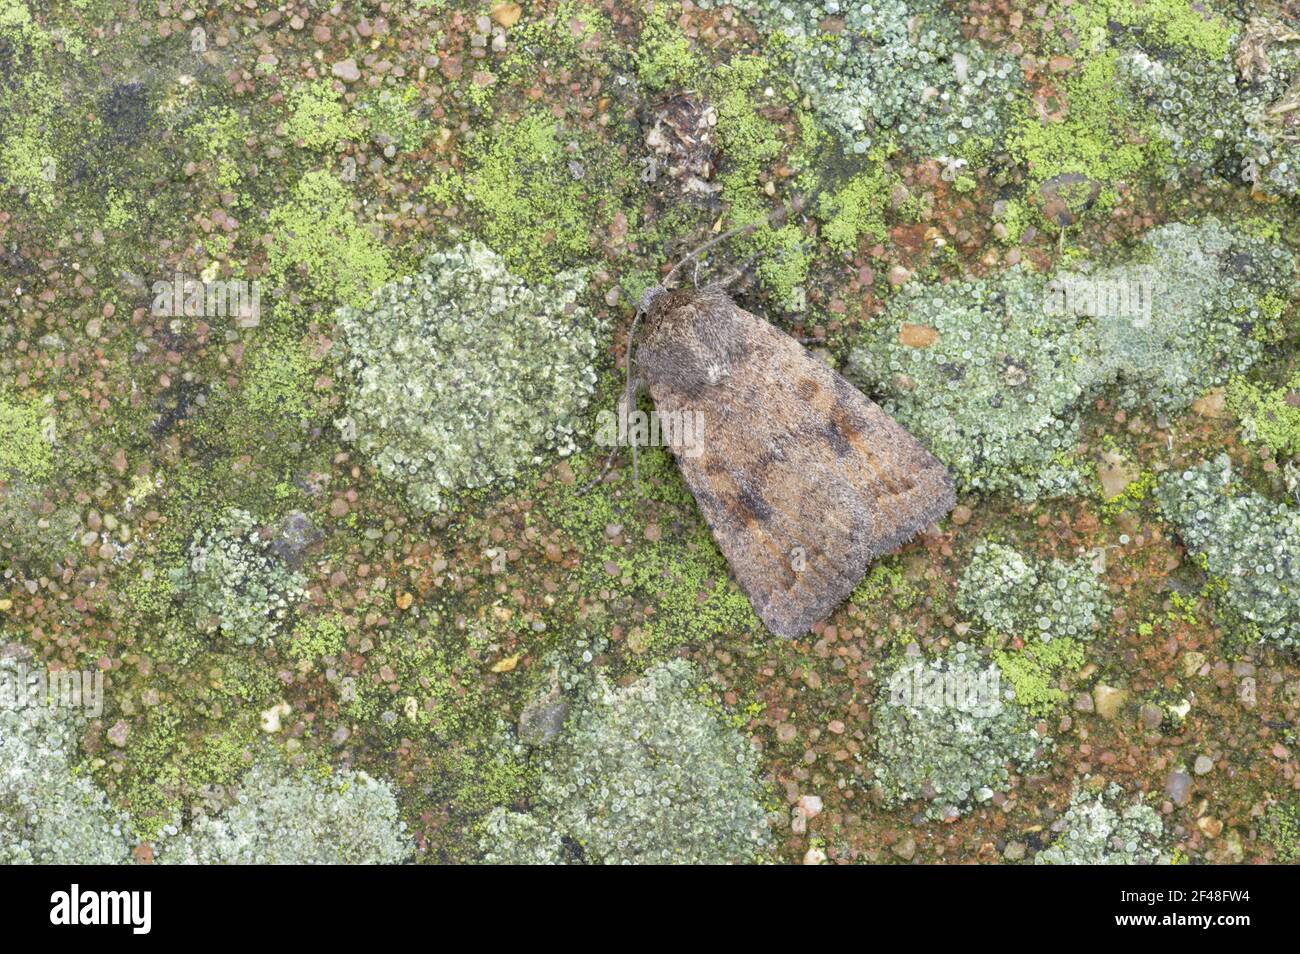 Mottled Rustic Moth Caradrina morpheus Essex, UK IN000684 Stock Photo